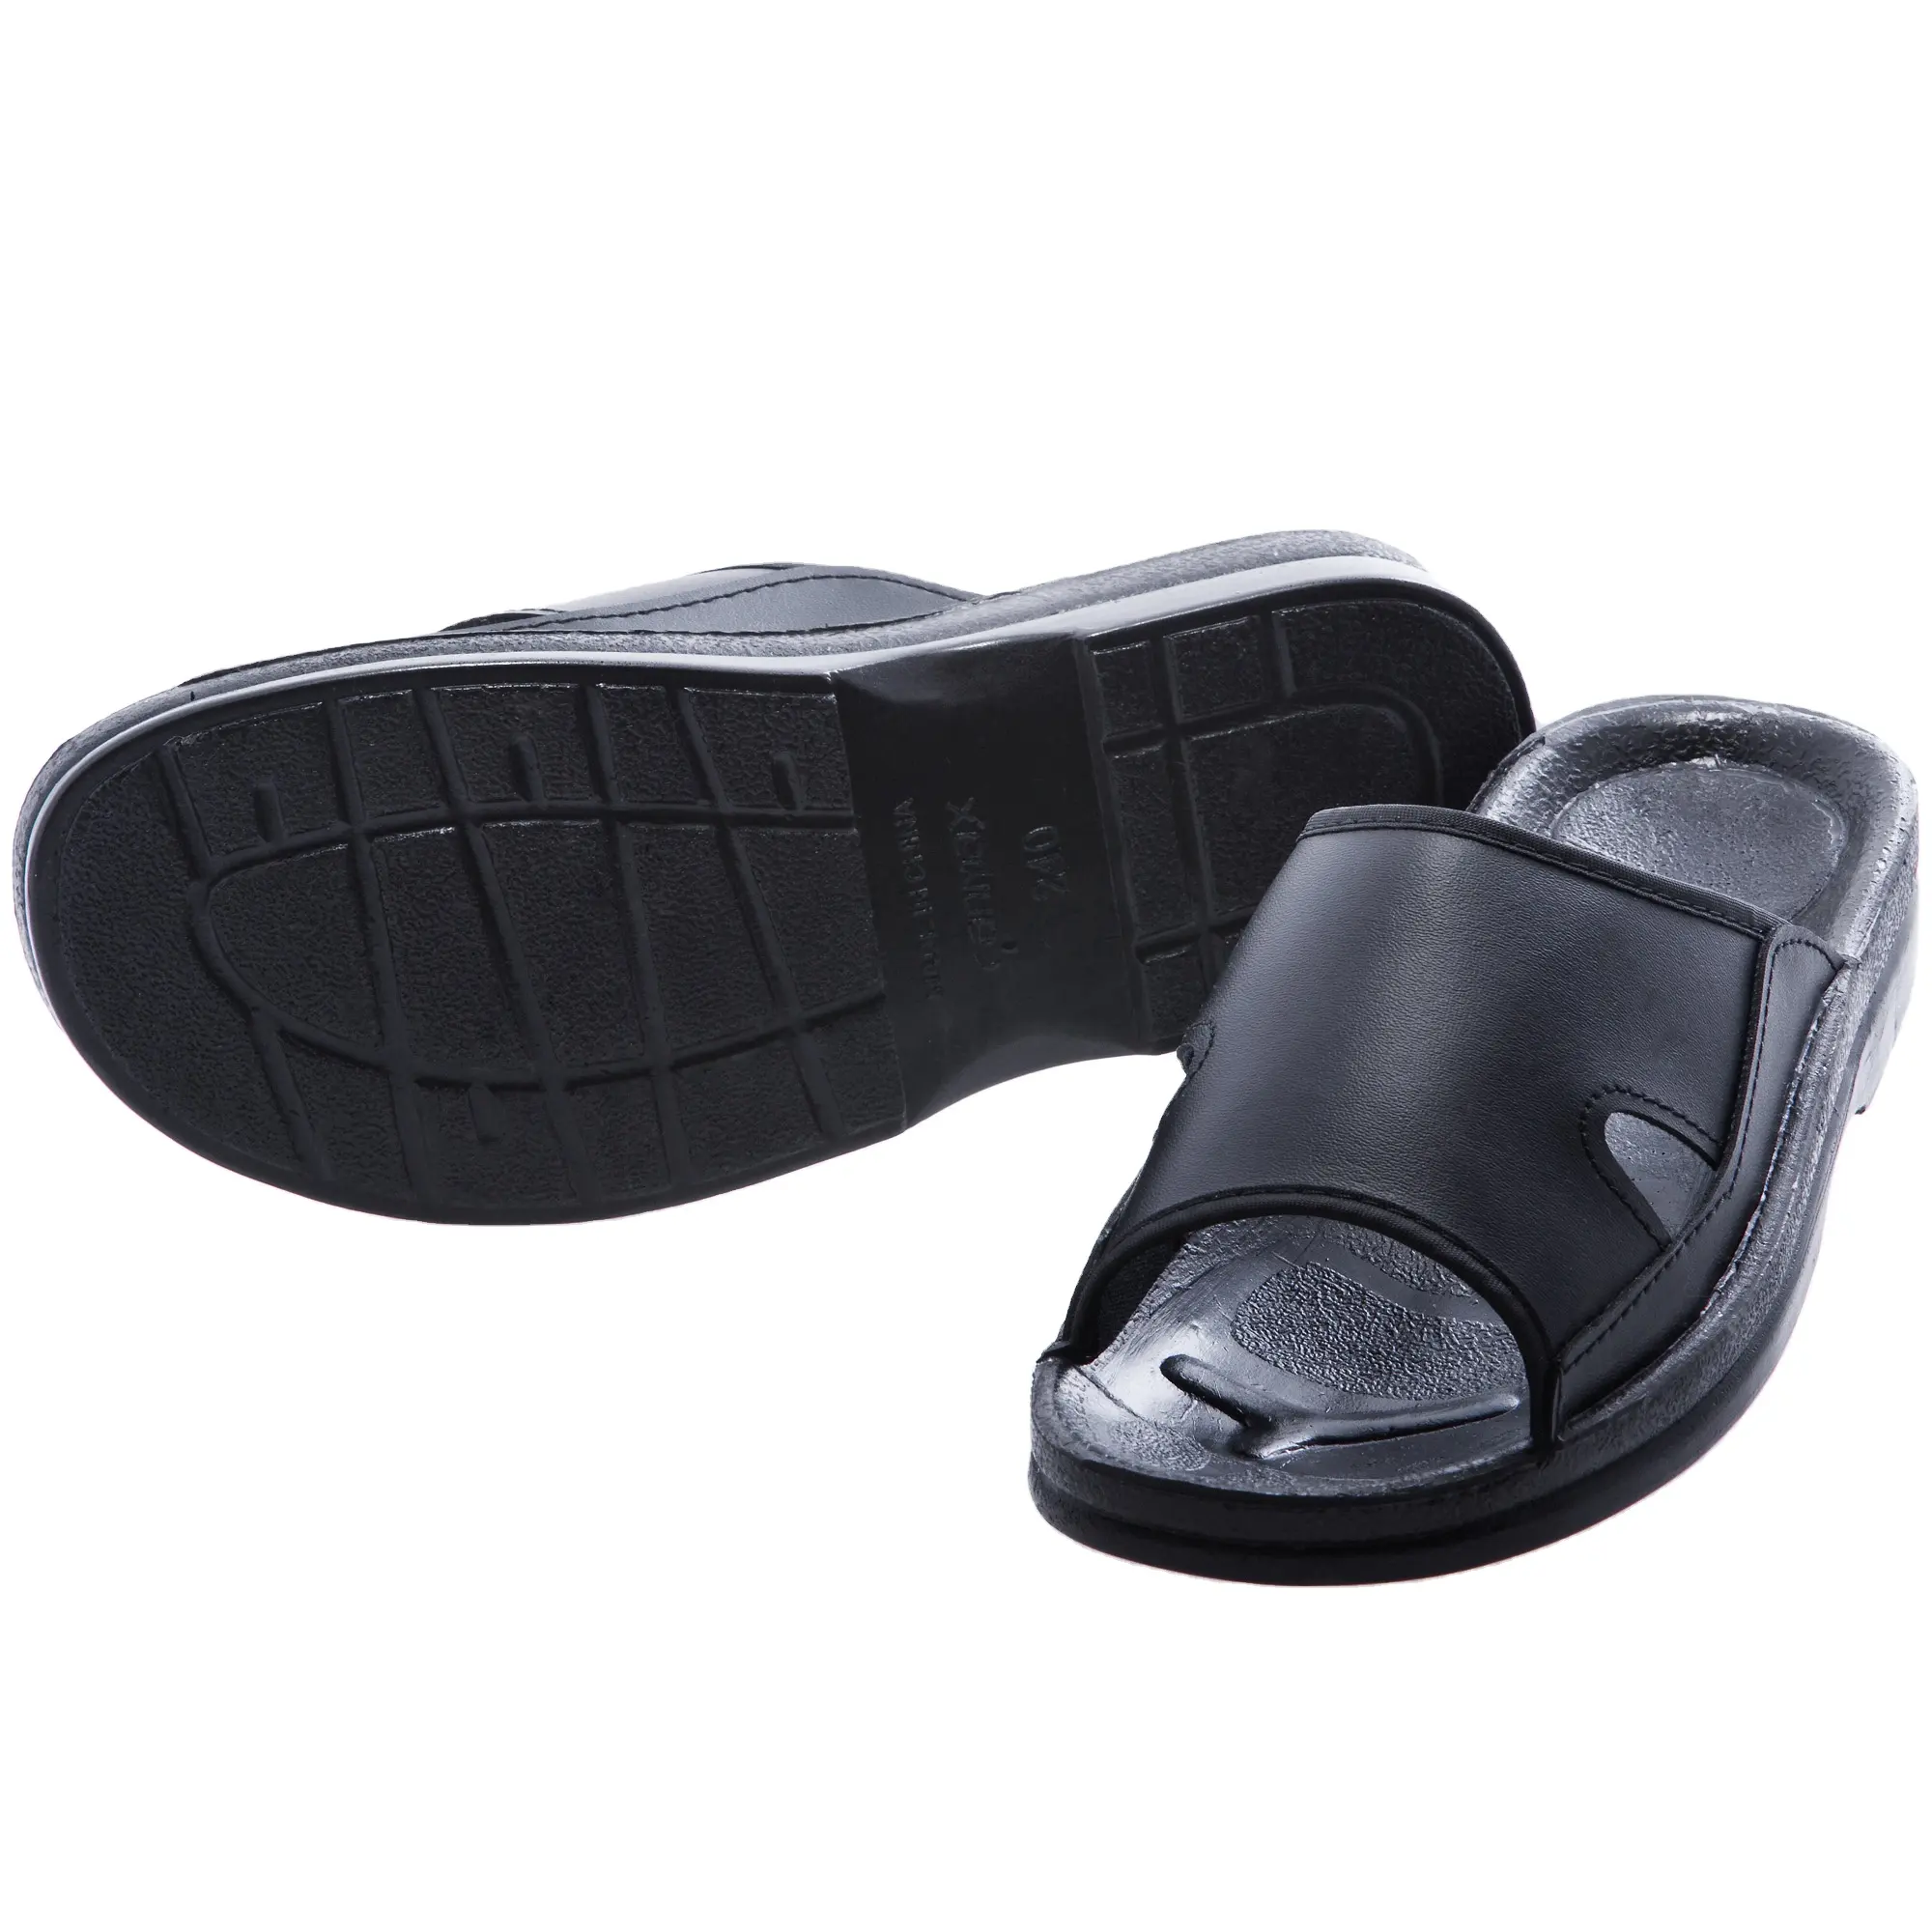 CANMAX vendita calda pantofola antistatica Esd scarpe antinfortunistiche per camera bianca